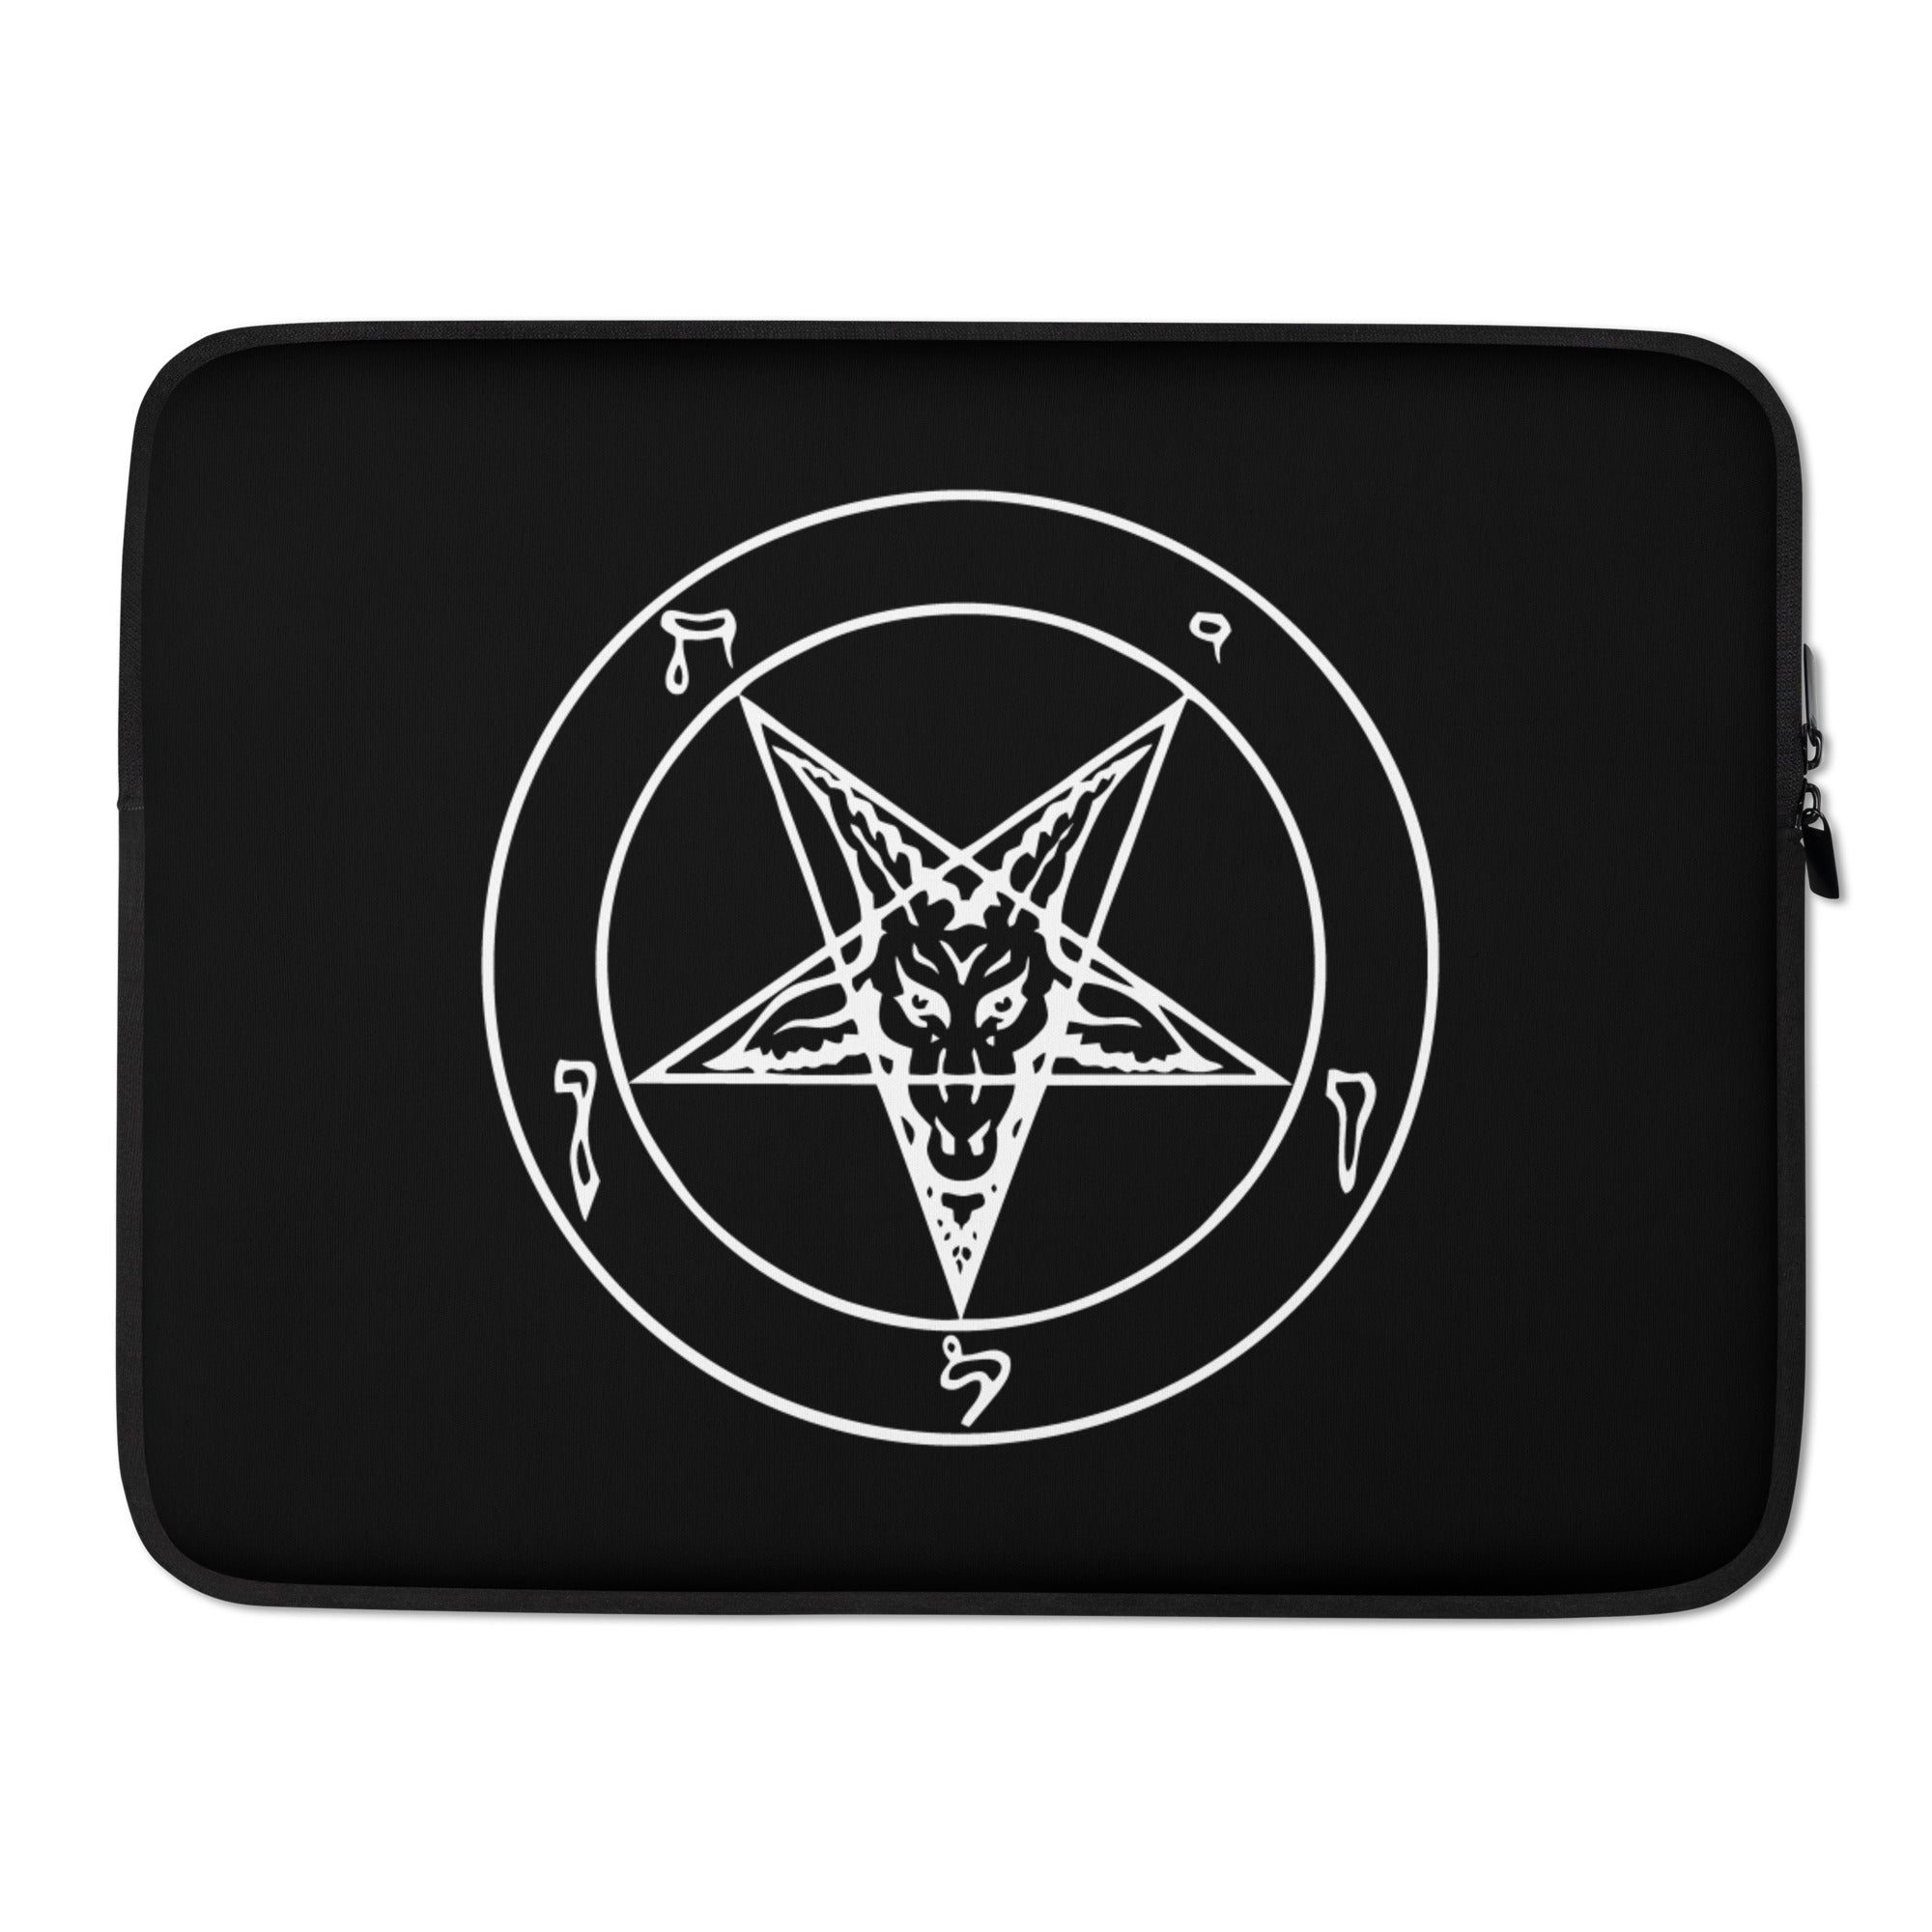 Baphomet Sigil Satanic Occult Symbol on Laptop Sleeve - Edge of Life Designs